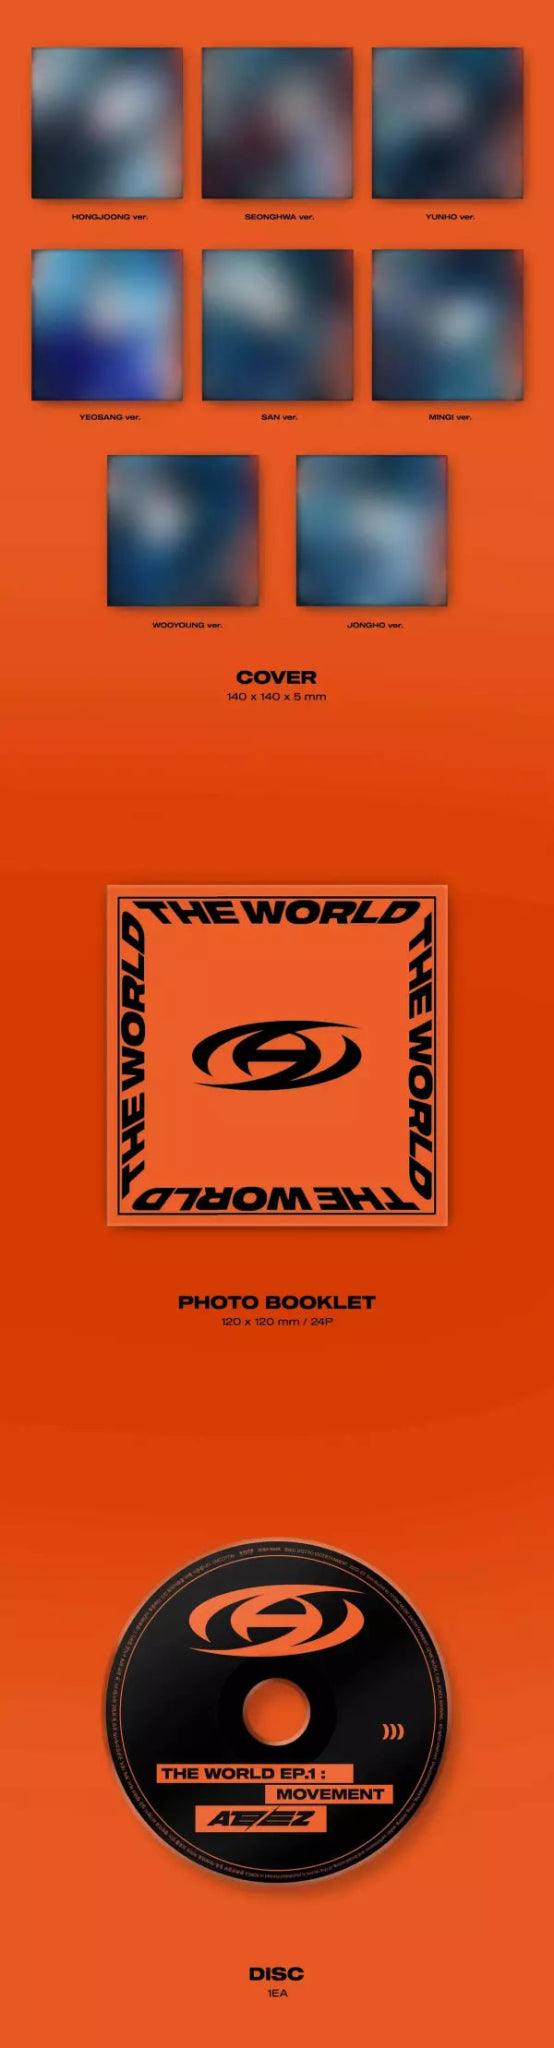 ATEEZ - ALBUM THE WORLD EP.1 MOVEMENT DIGIPAK VER. - K-POP WORLD (6769471717511)